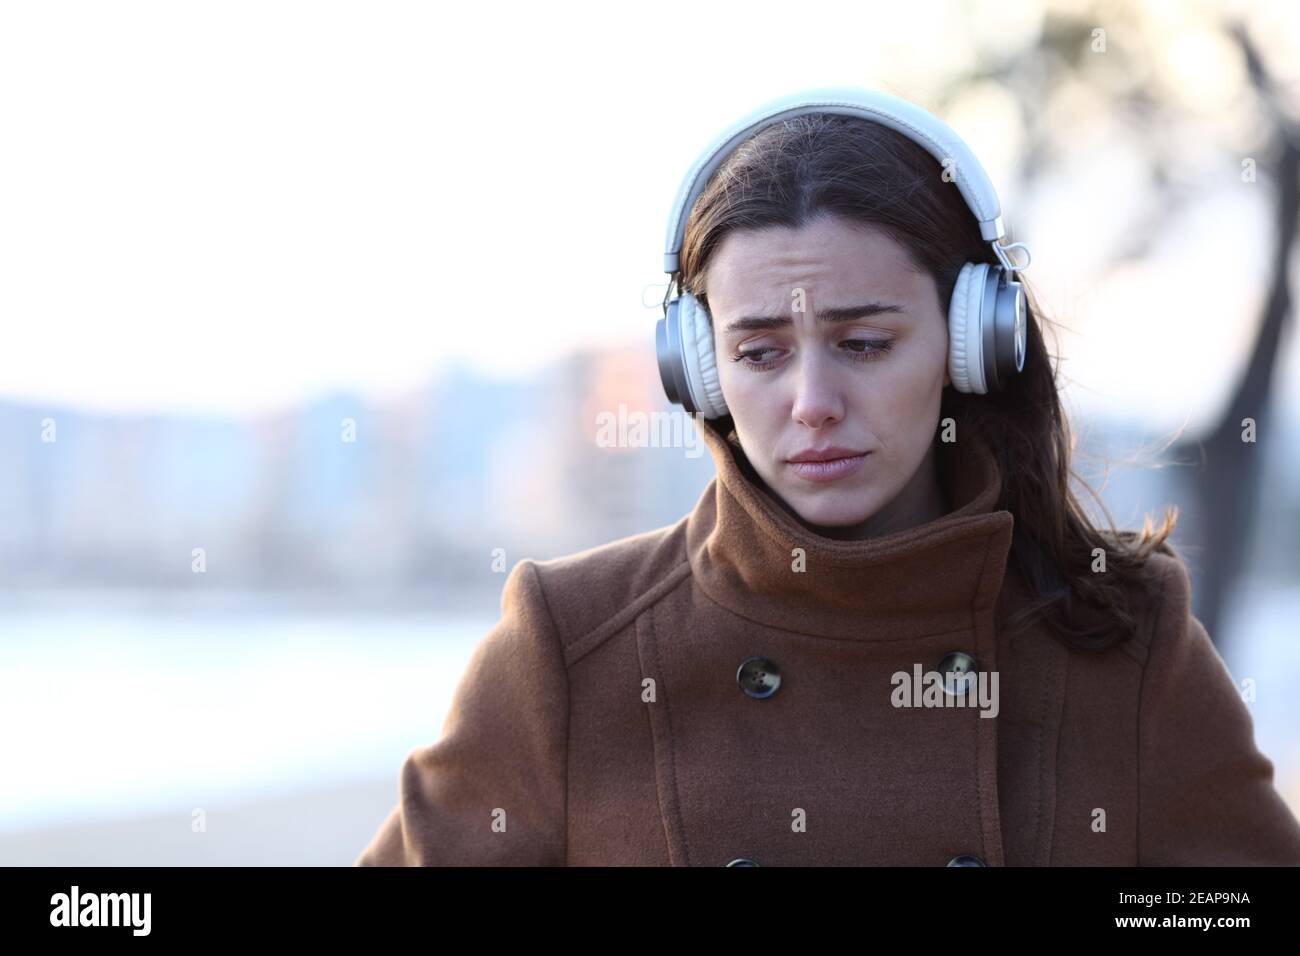 Sad woman walking listening to music alone in winter Stock Photo